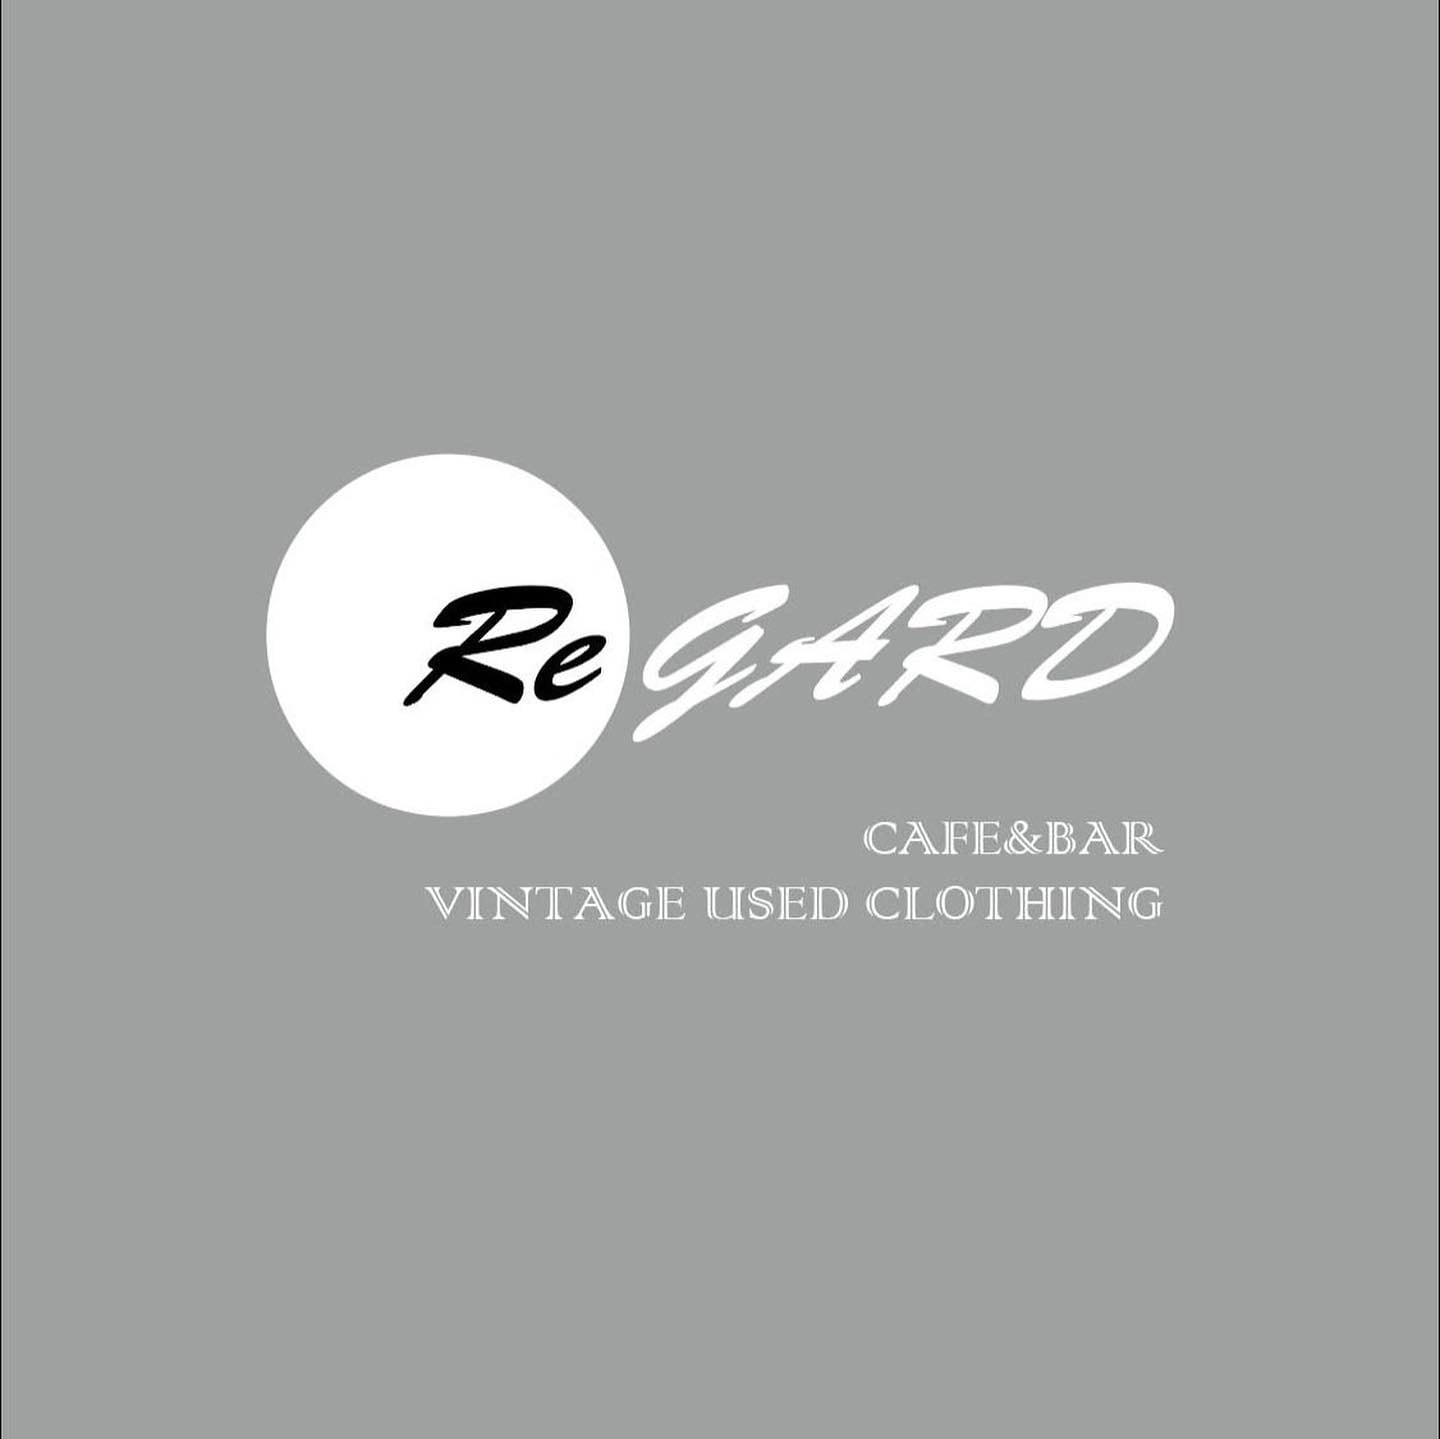 Vintage Used Clothing & CAFE/BAR “ReGARD”